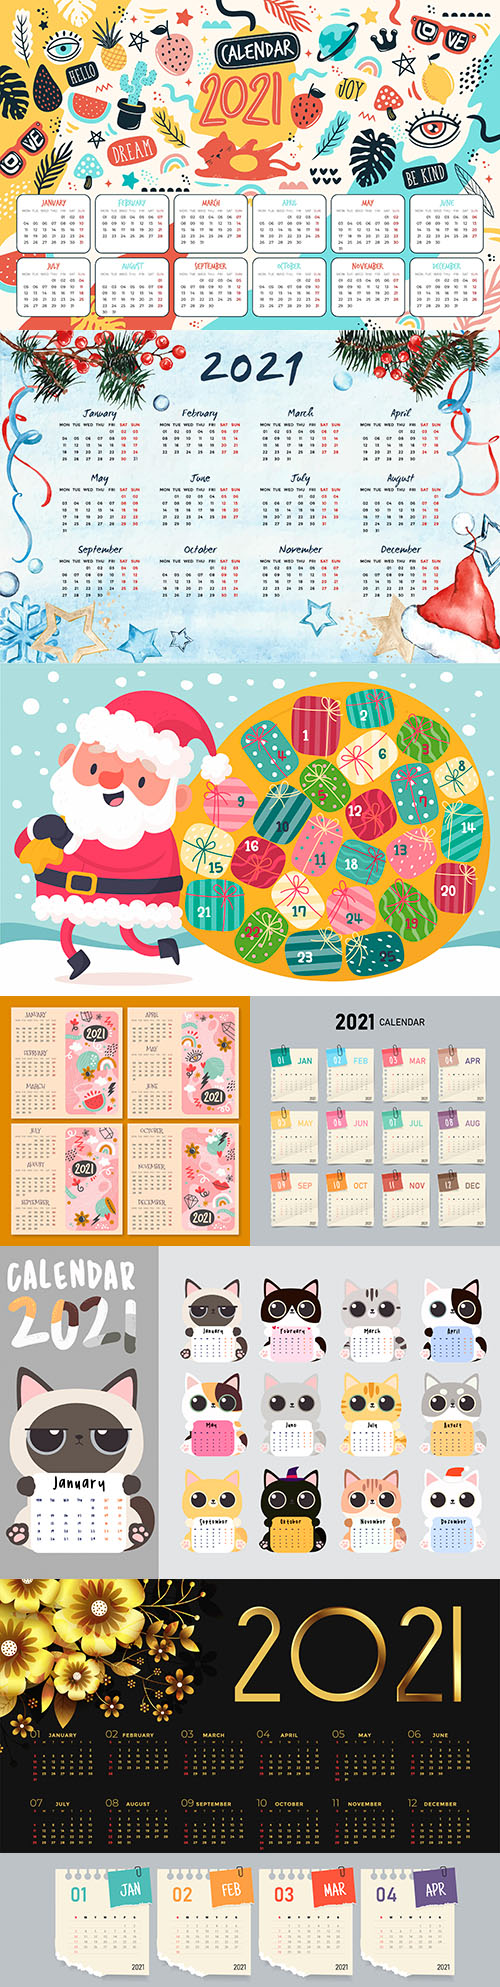 Painted calendar New Year 2021 decorative design
